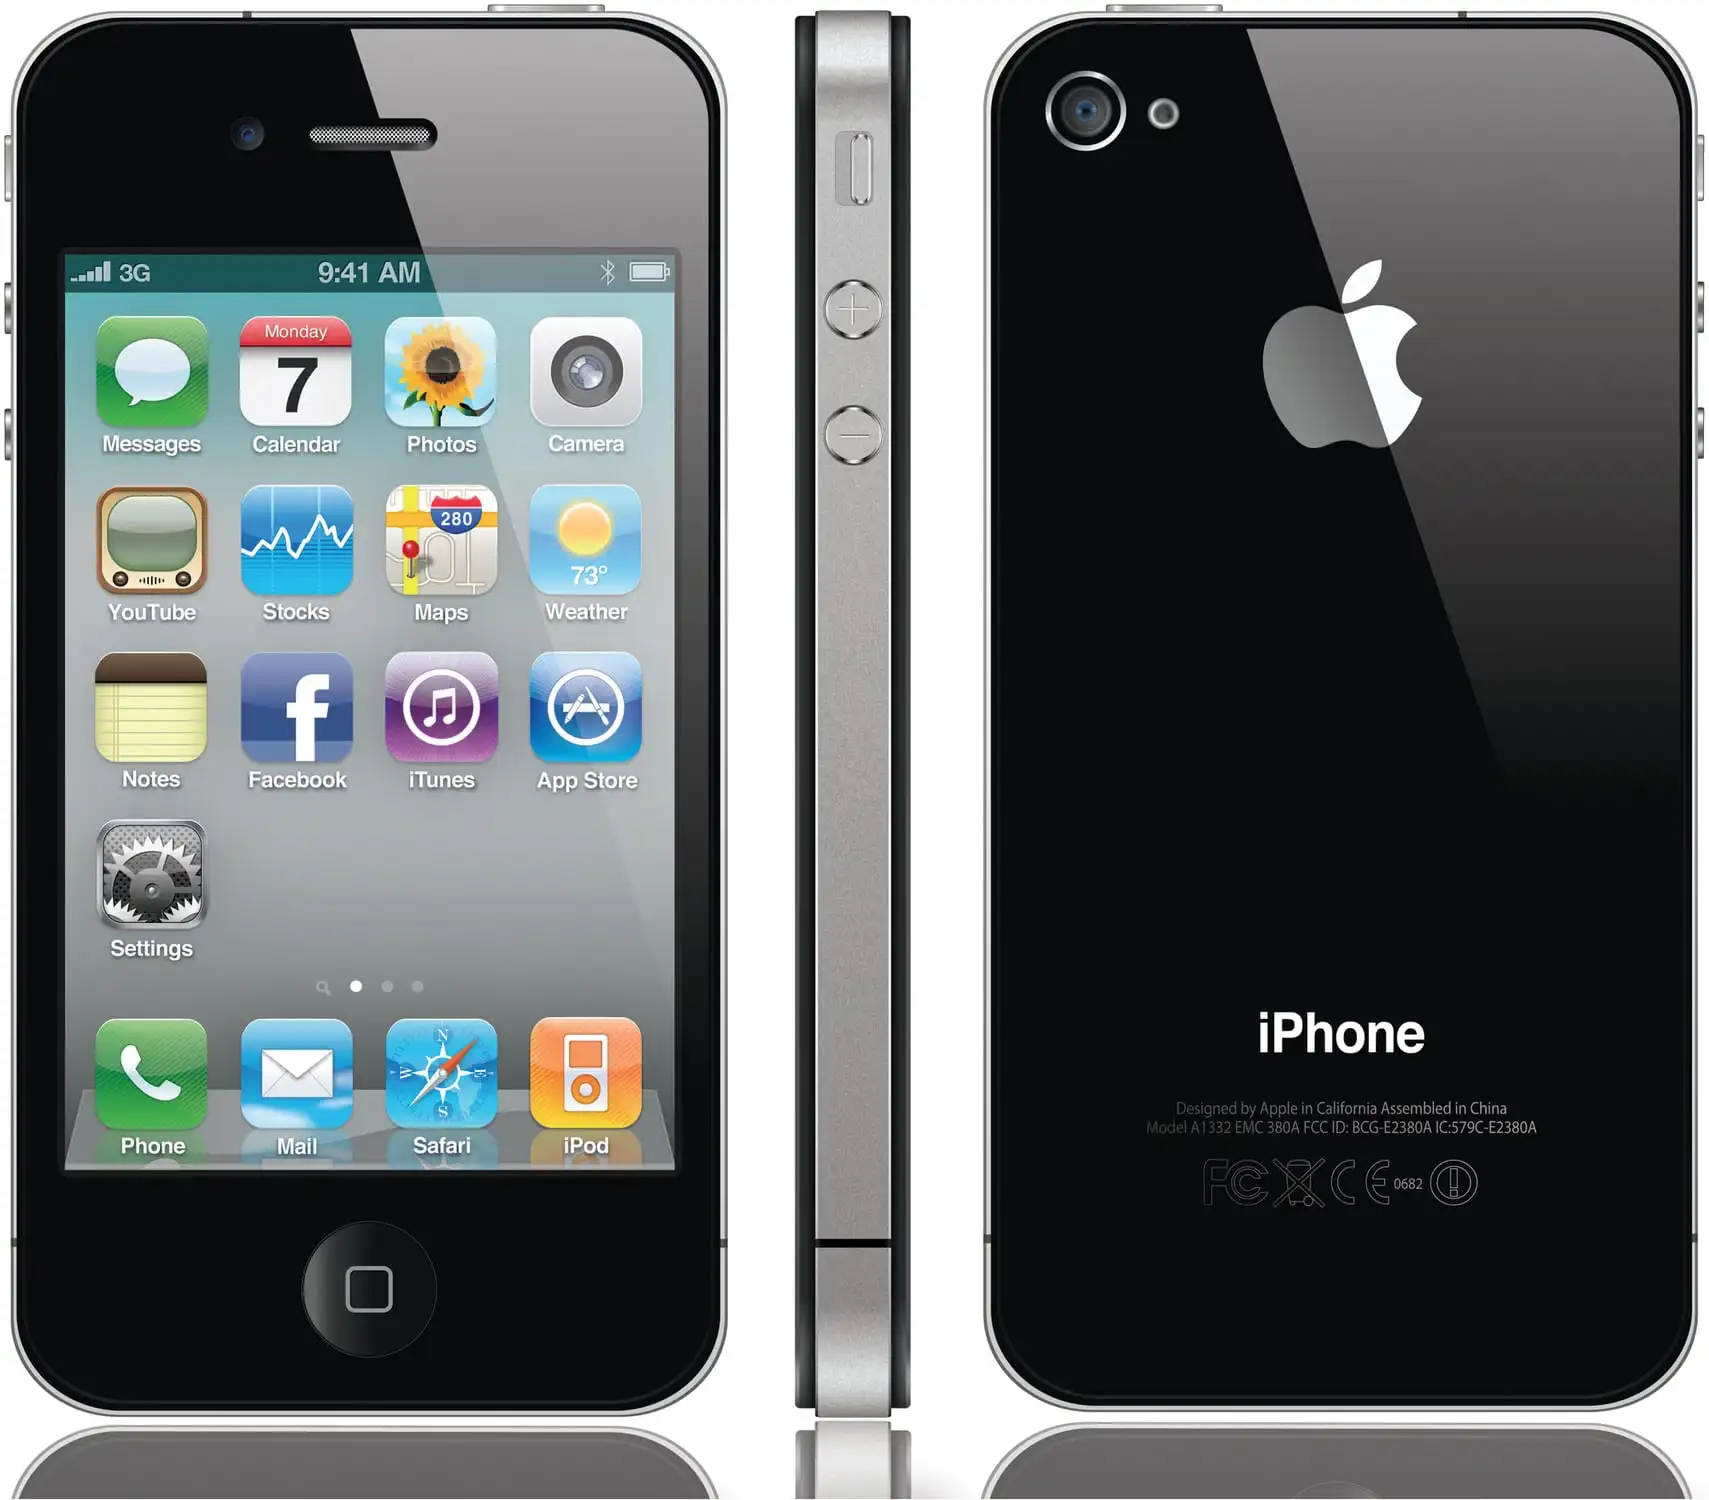 Apple iPhone 4 GSM Specs